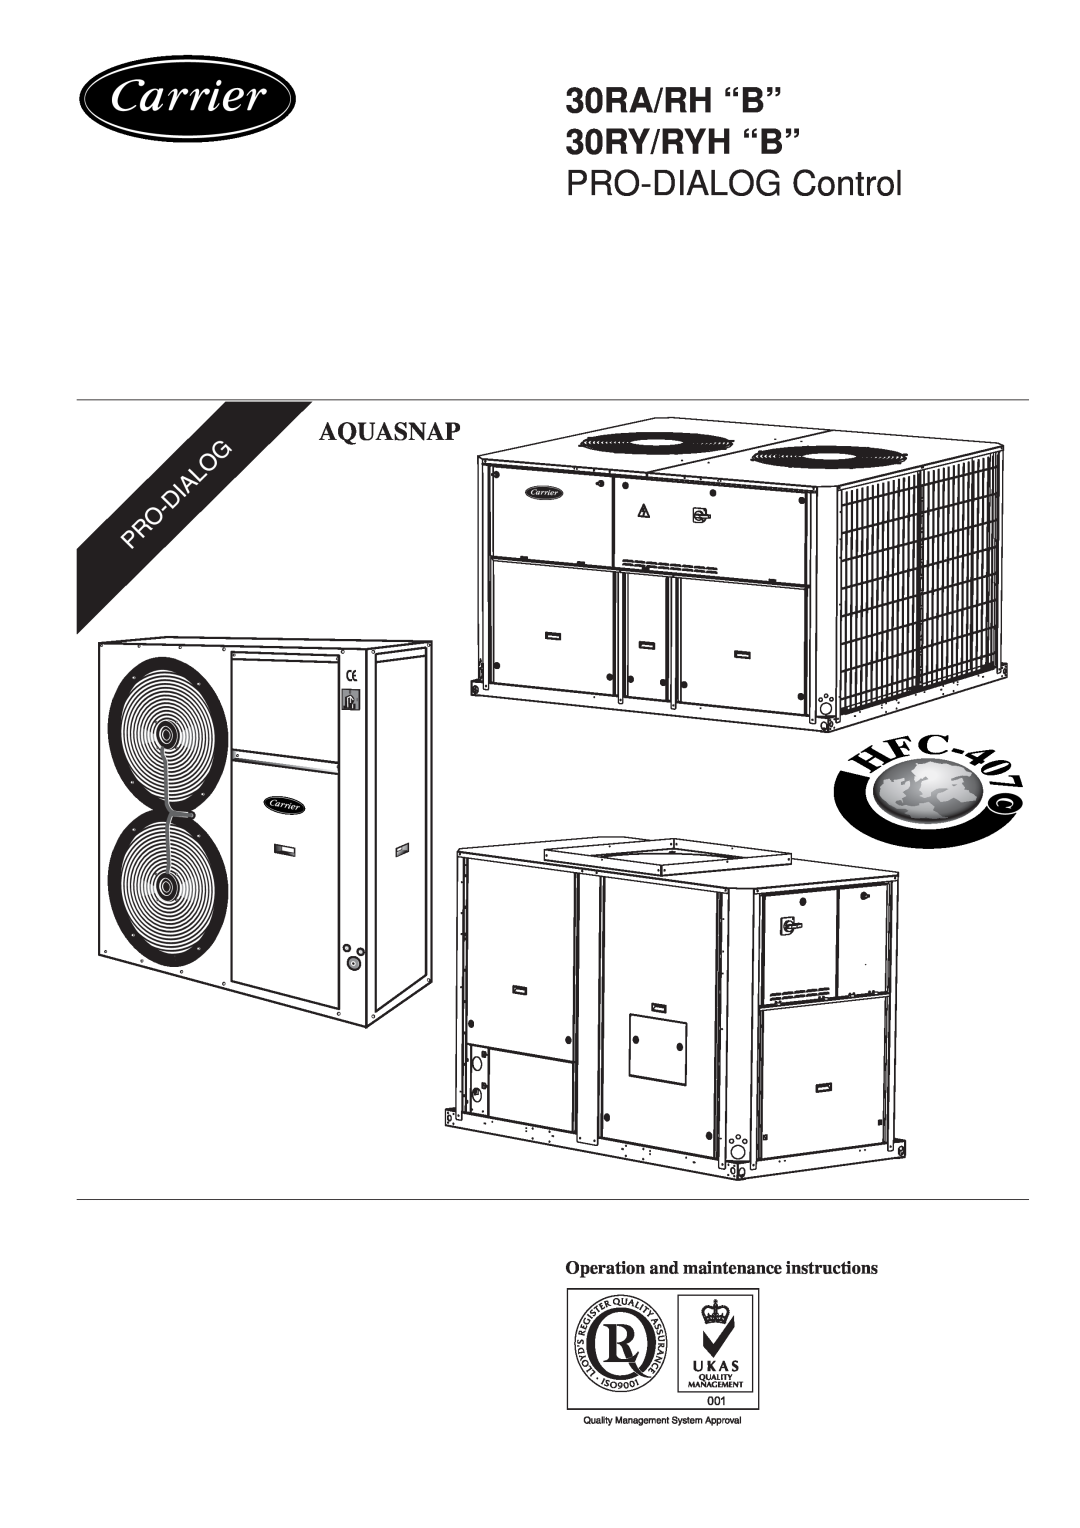 Carrier manual Operation and maintenance instructions, 30RA/RH “B” 30RY/RYH “B” PRO-DIALOGControl, Aquasnap 